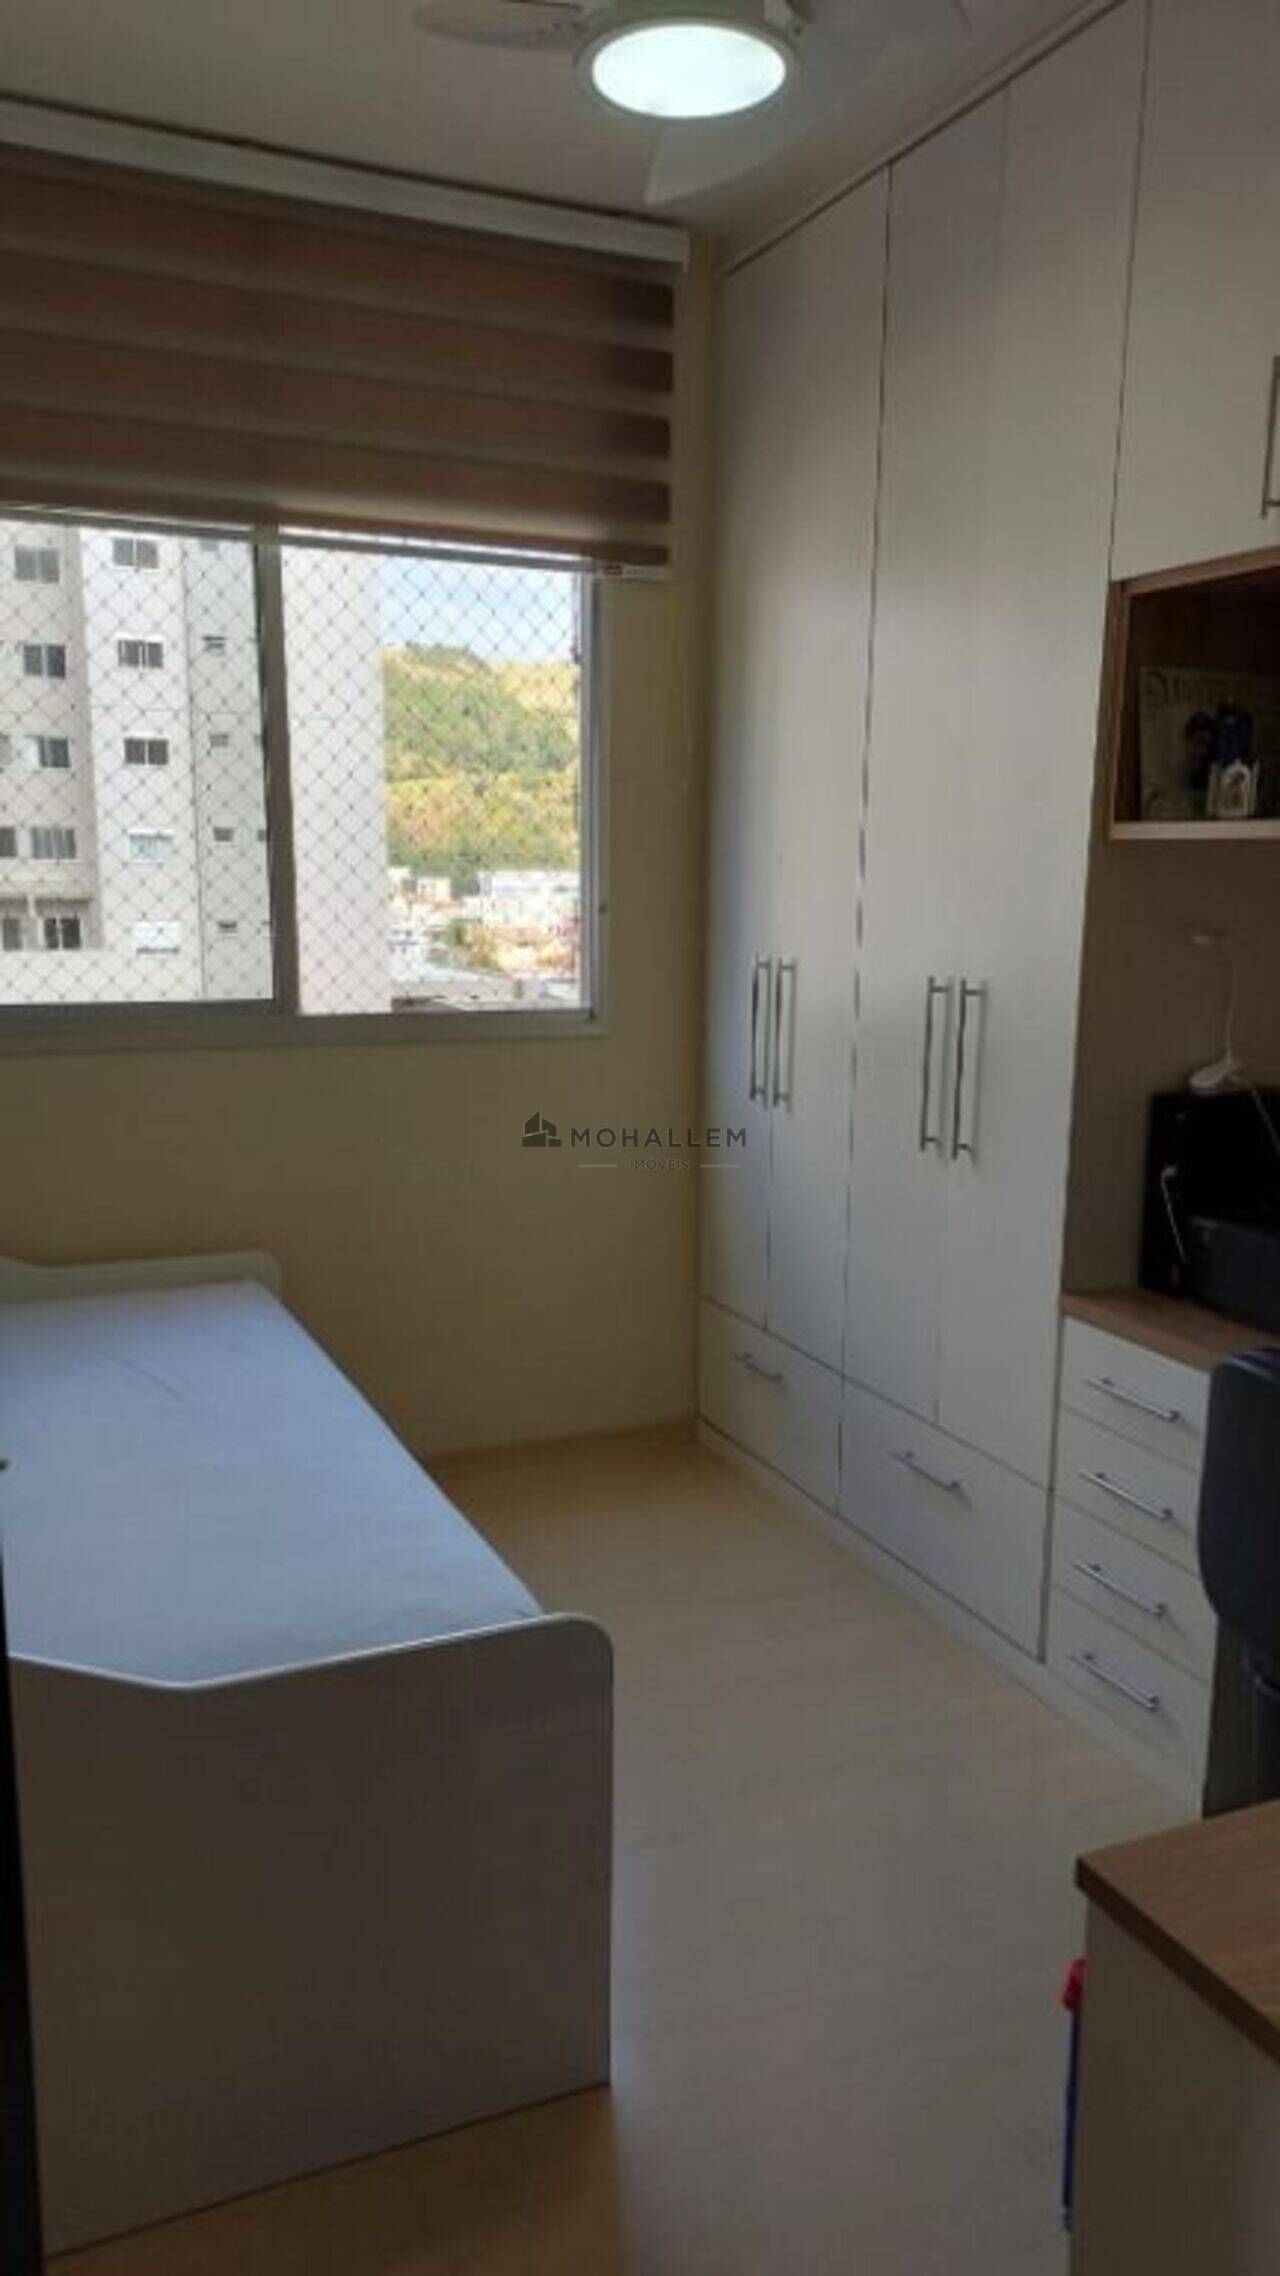 Apartamento Varginha, Itajubá - MG